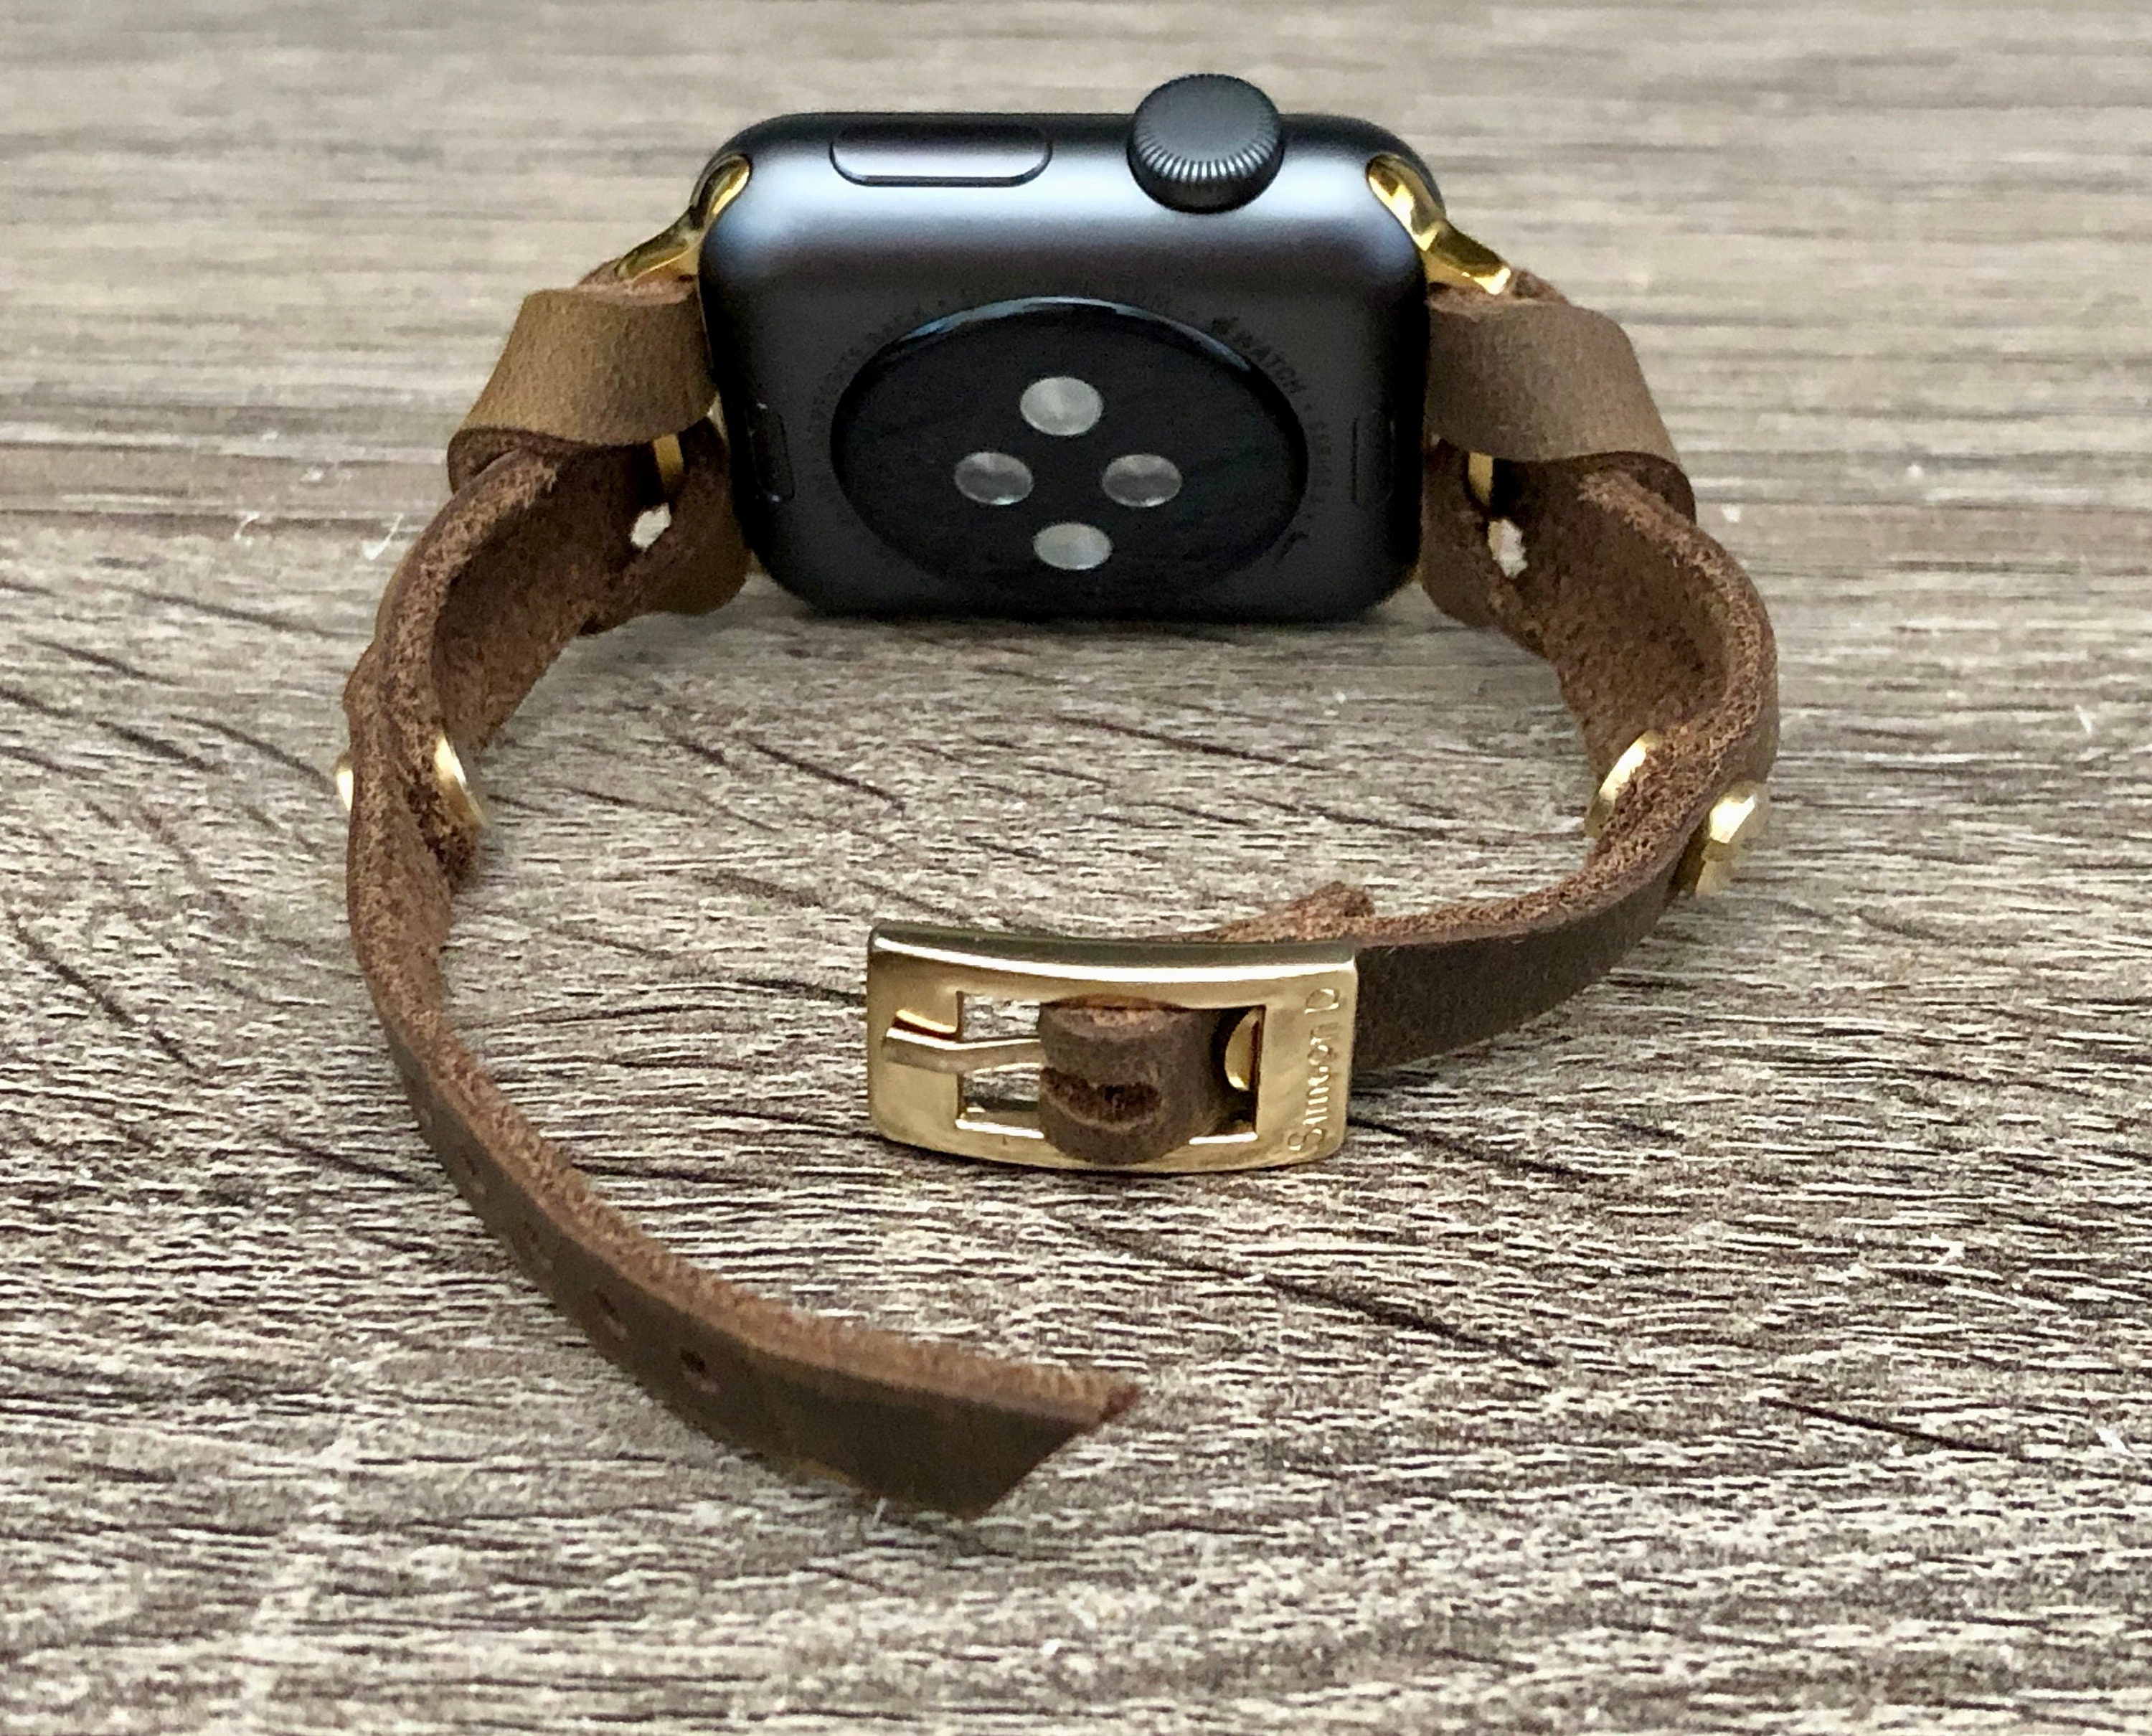 Apple Watch Leather Band ™ Cognac Vintage